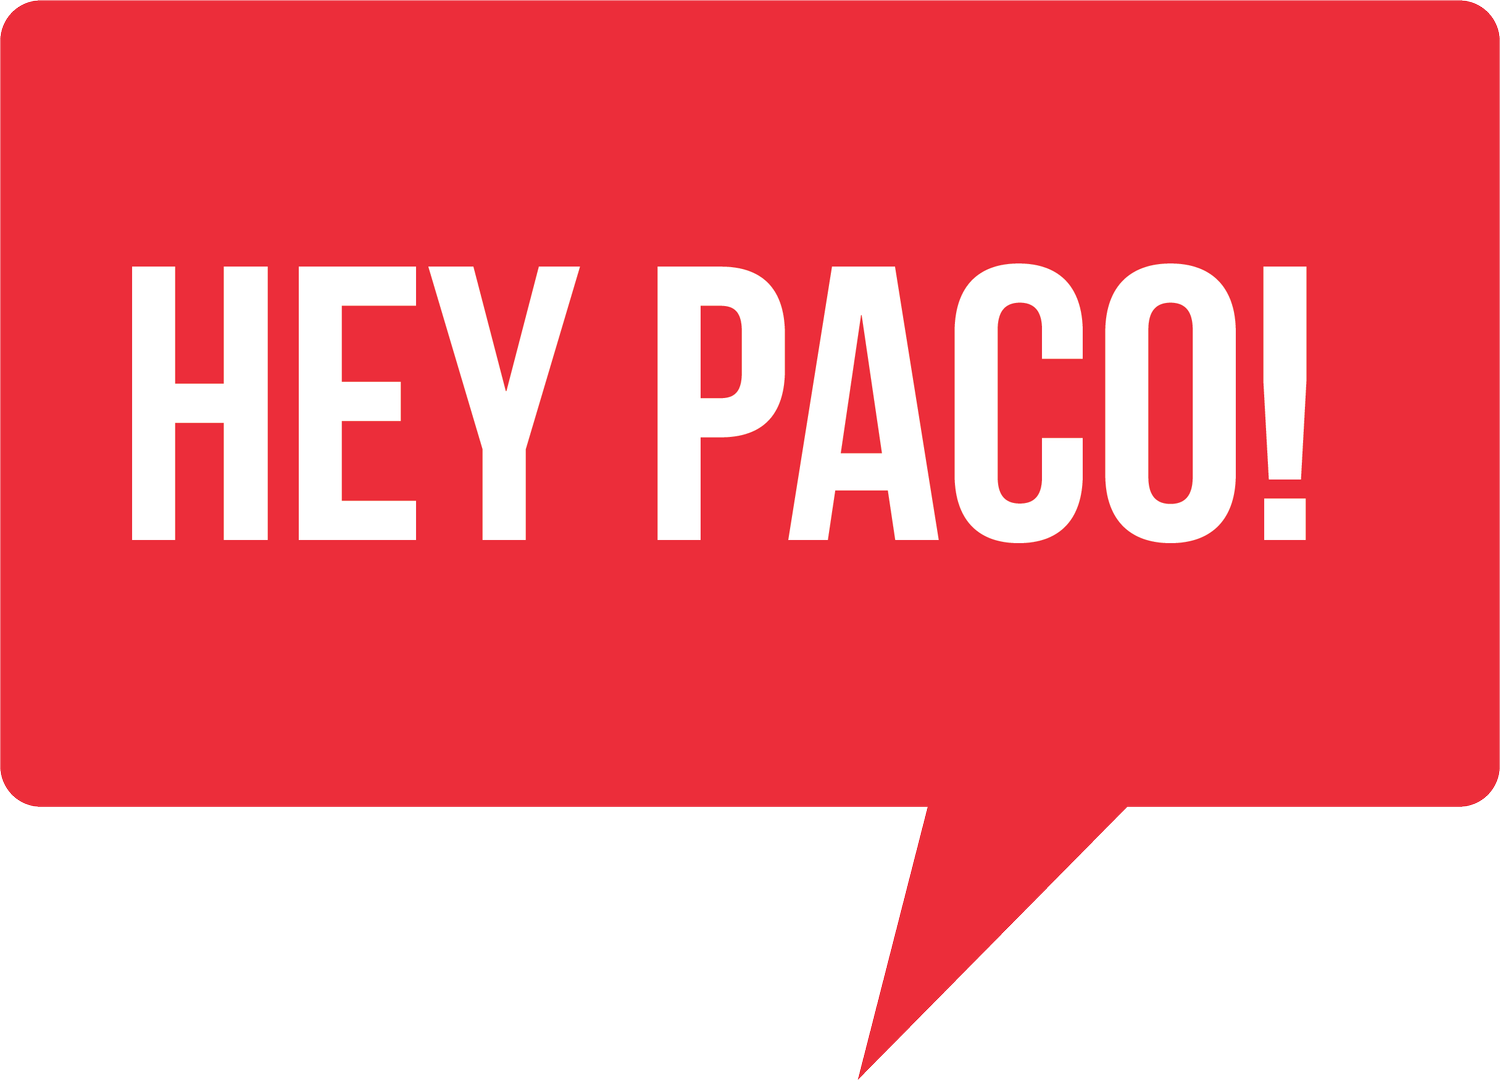 Hey Paco!